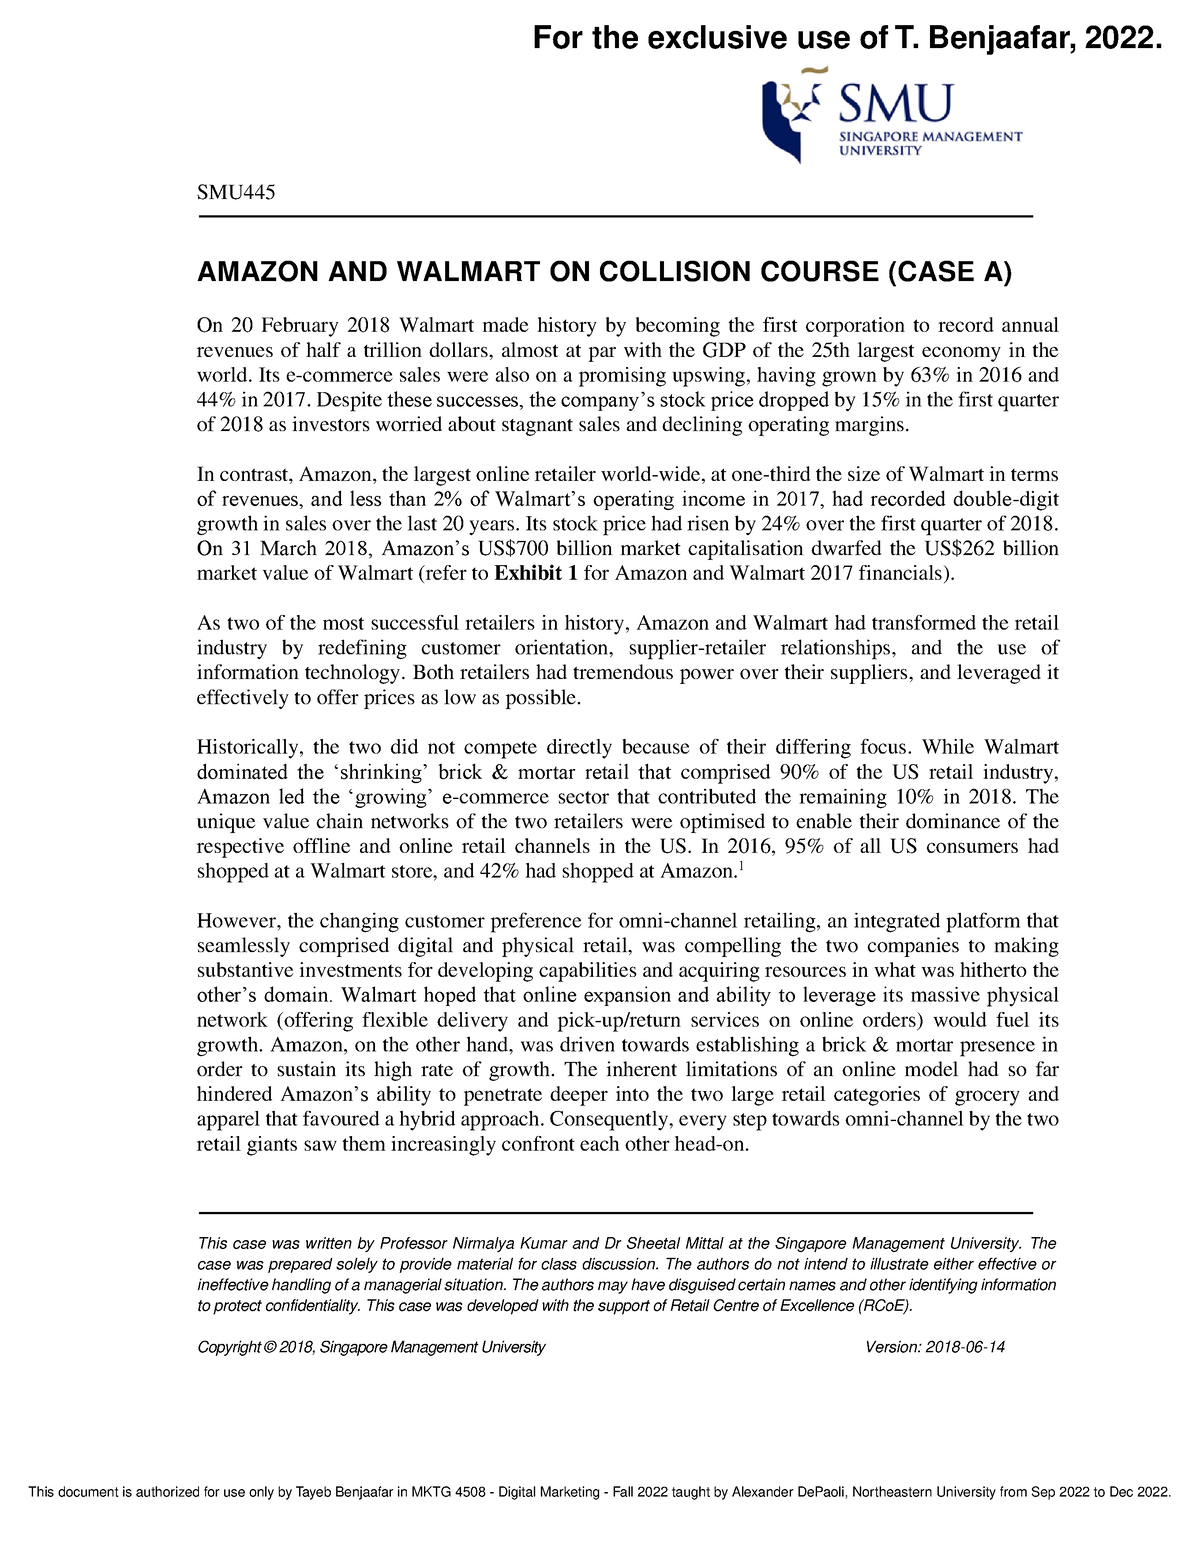 amazon vs walmart case study answers